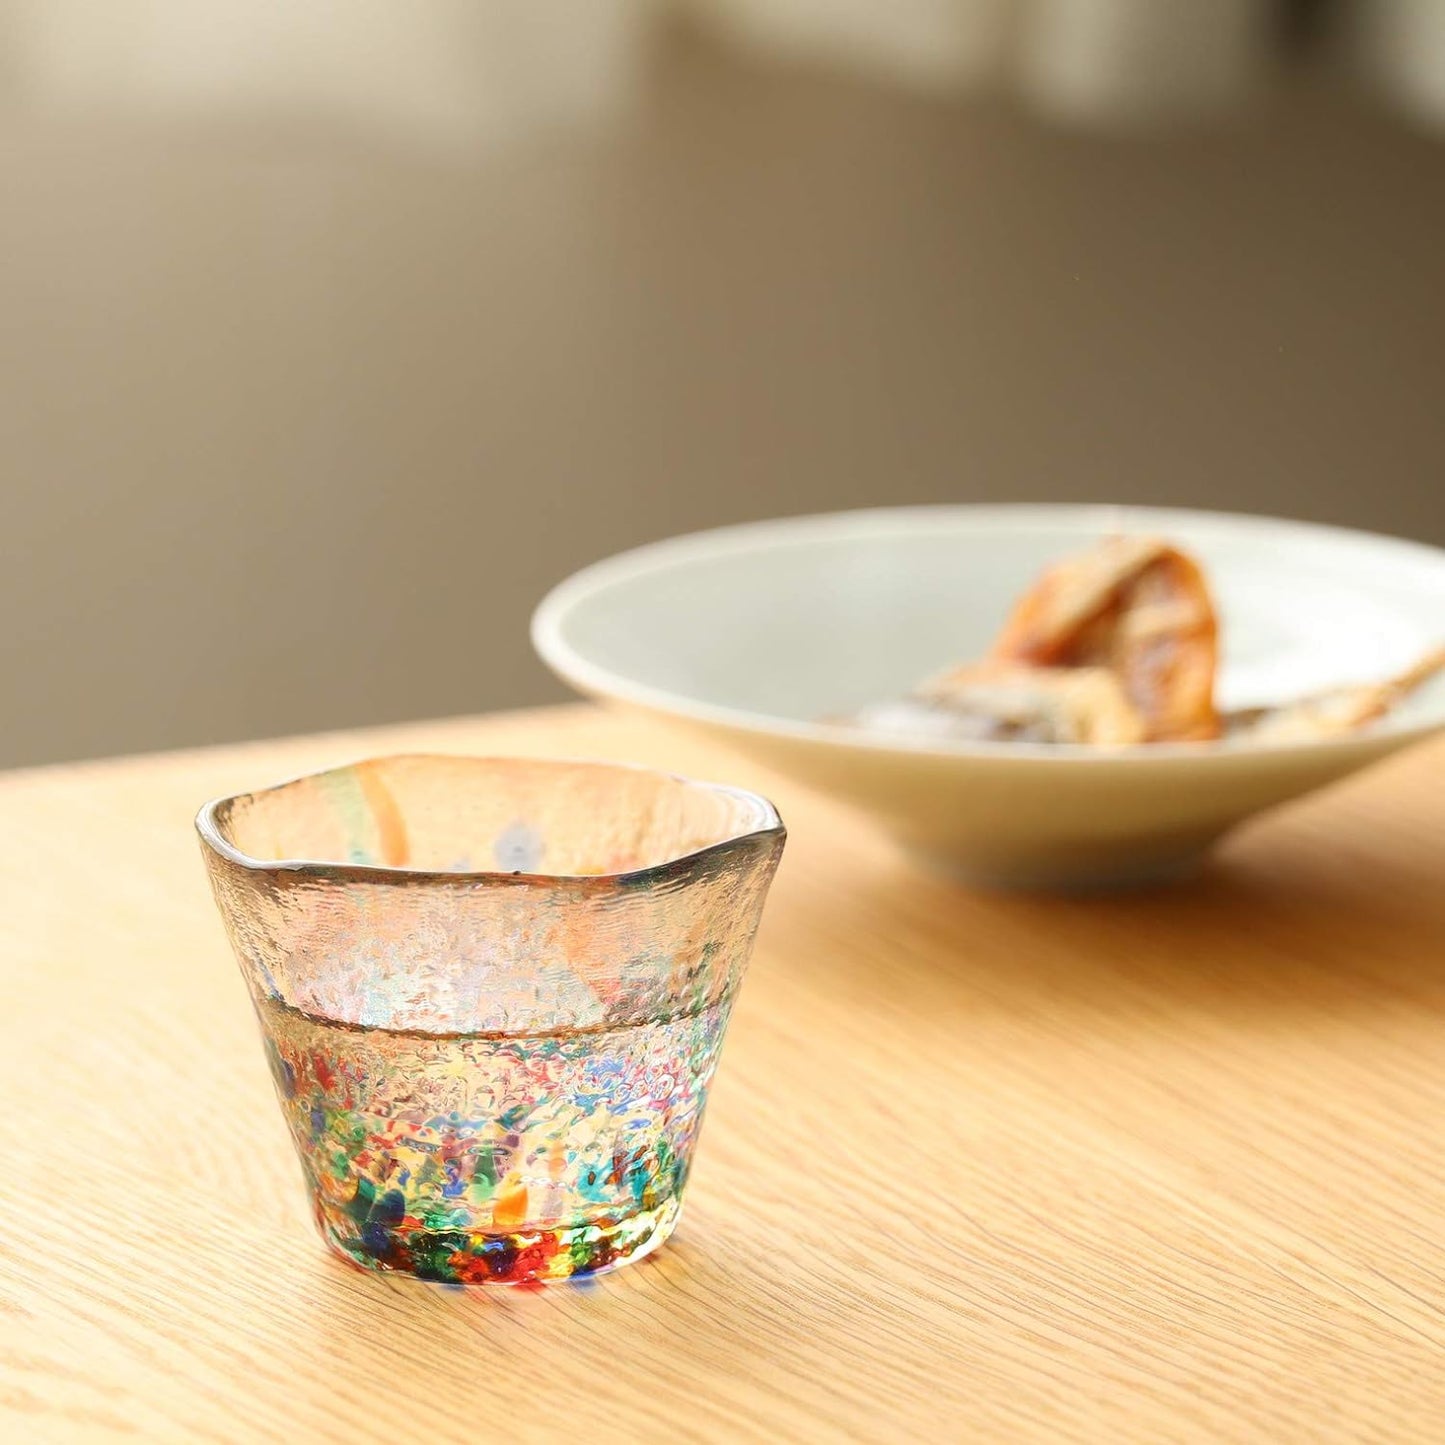 Tsugaru Vidro Sake cup Traditional Japanese Glass Nebuta Yomatsuri Handmade Made in Japan 津軽びいどろ ねぶた夜祭